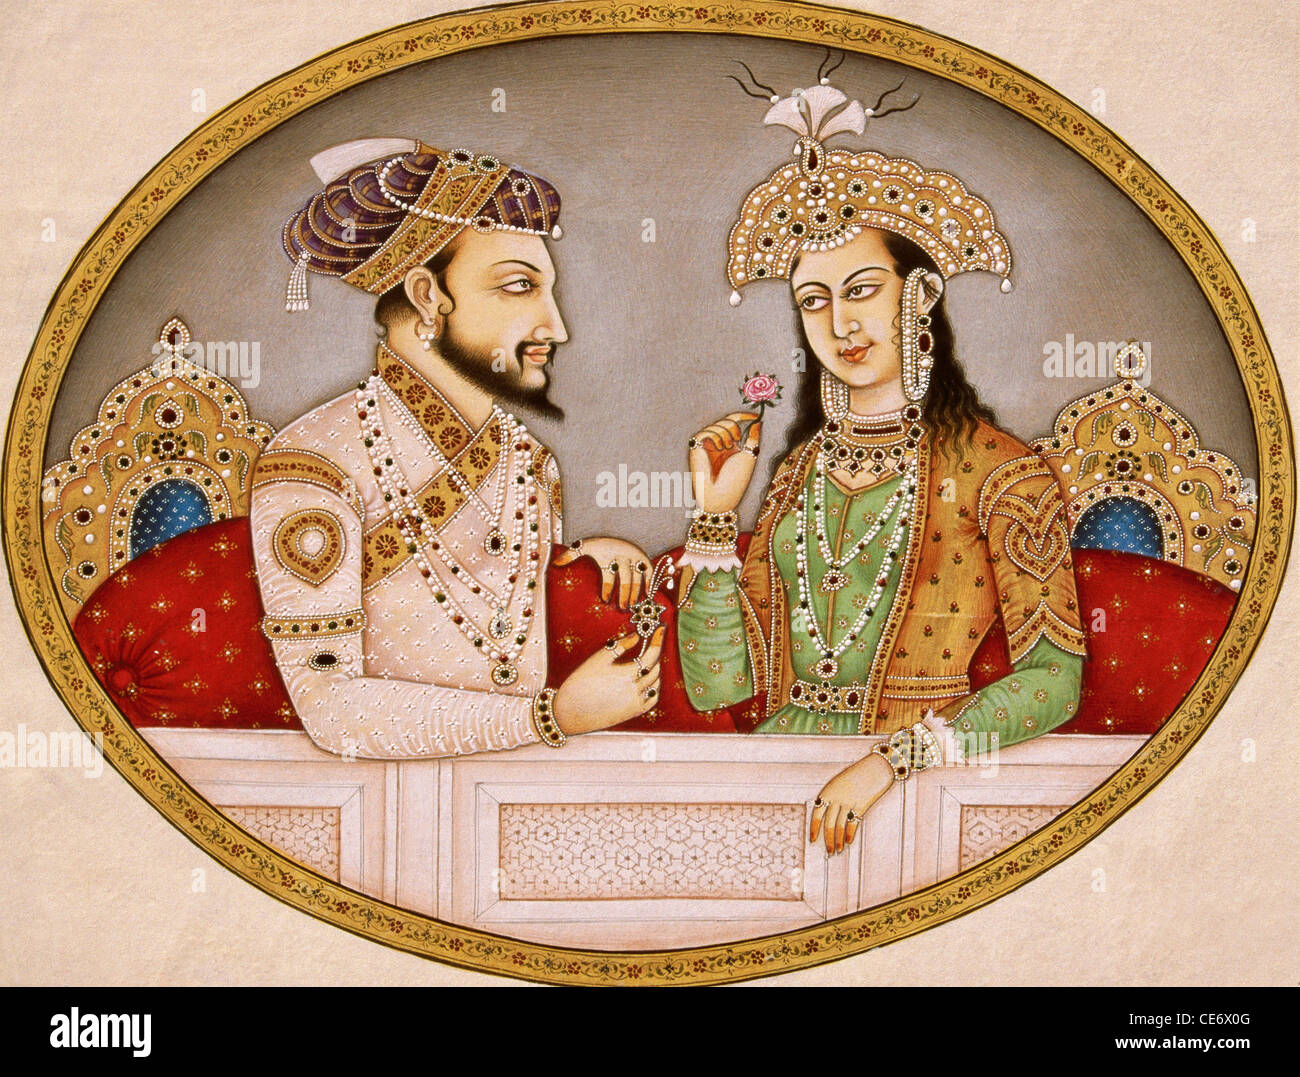 Pintura en miniatura del emperador mogol Shah Jahan con la reina Mumtaz